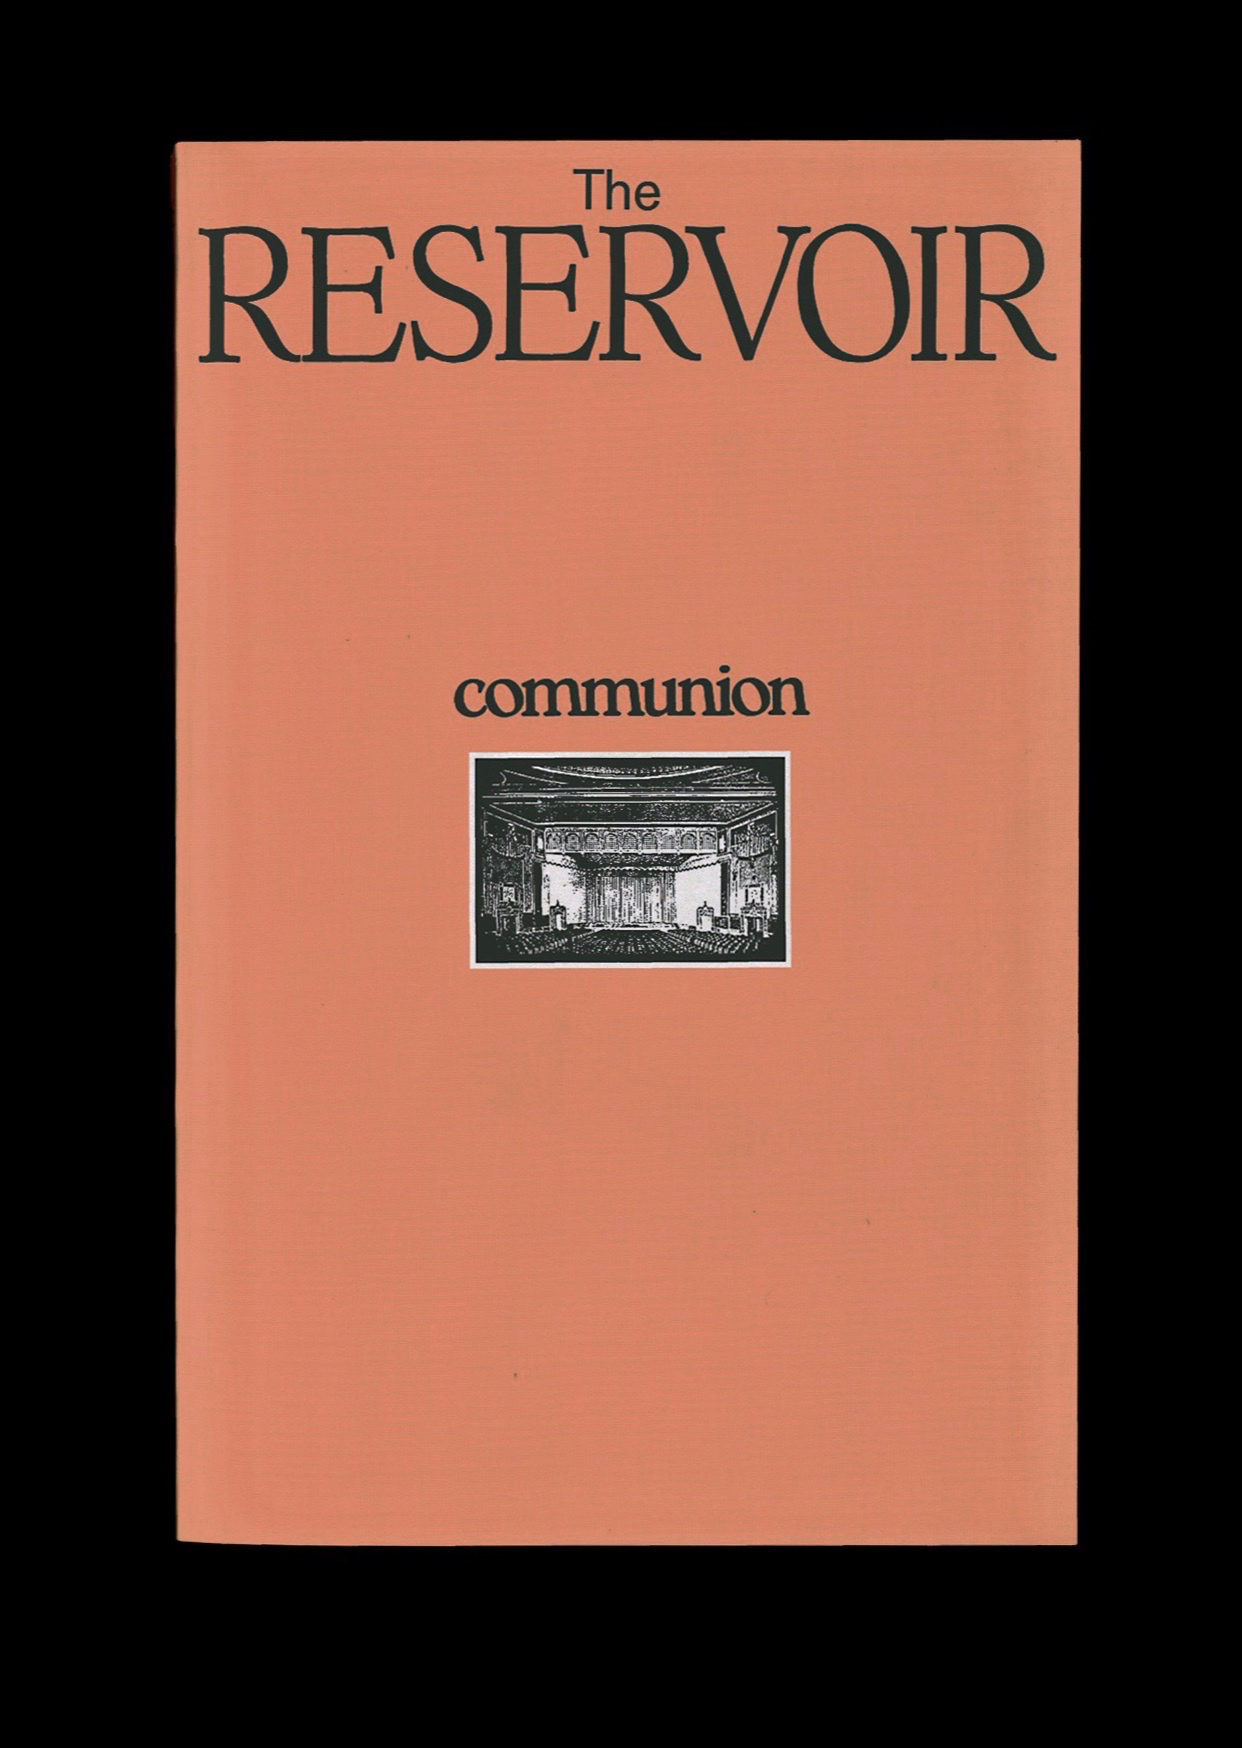 the reservoir: communion